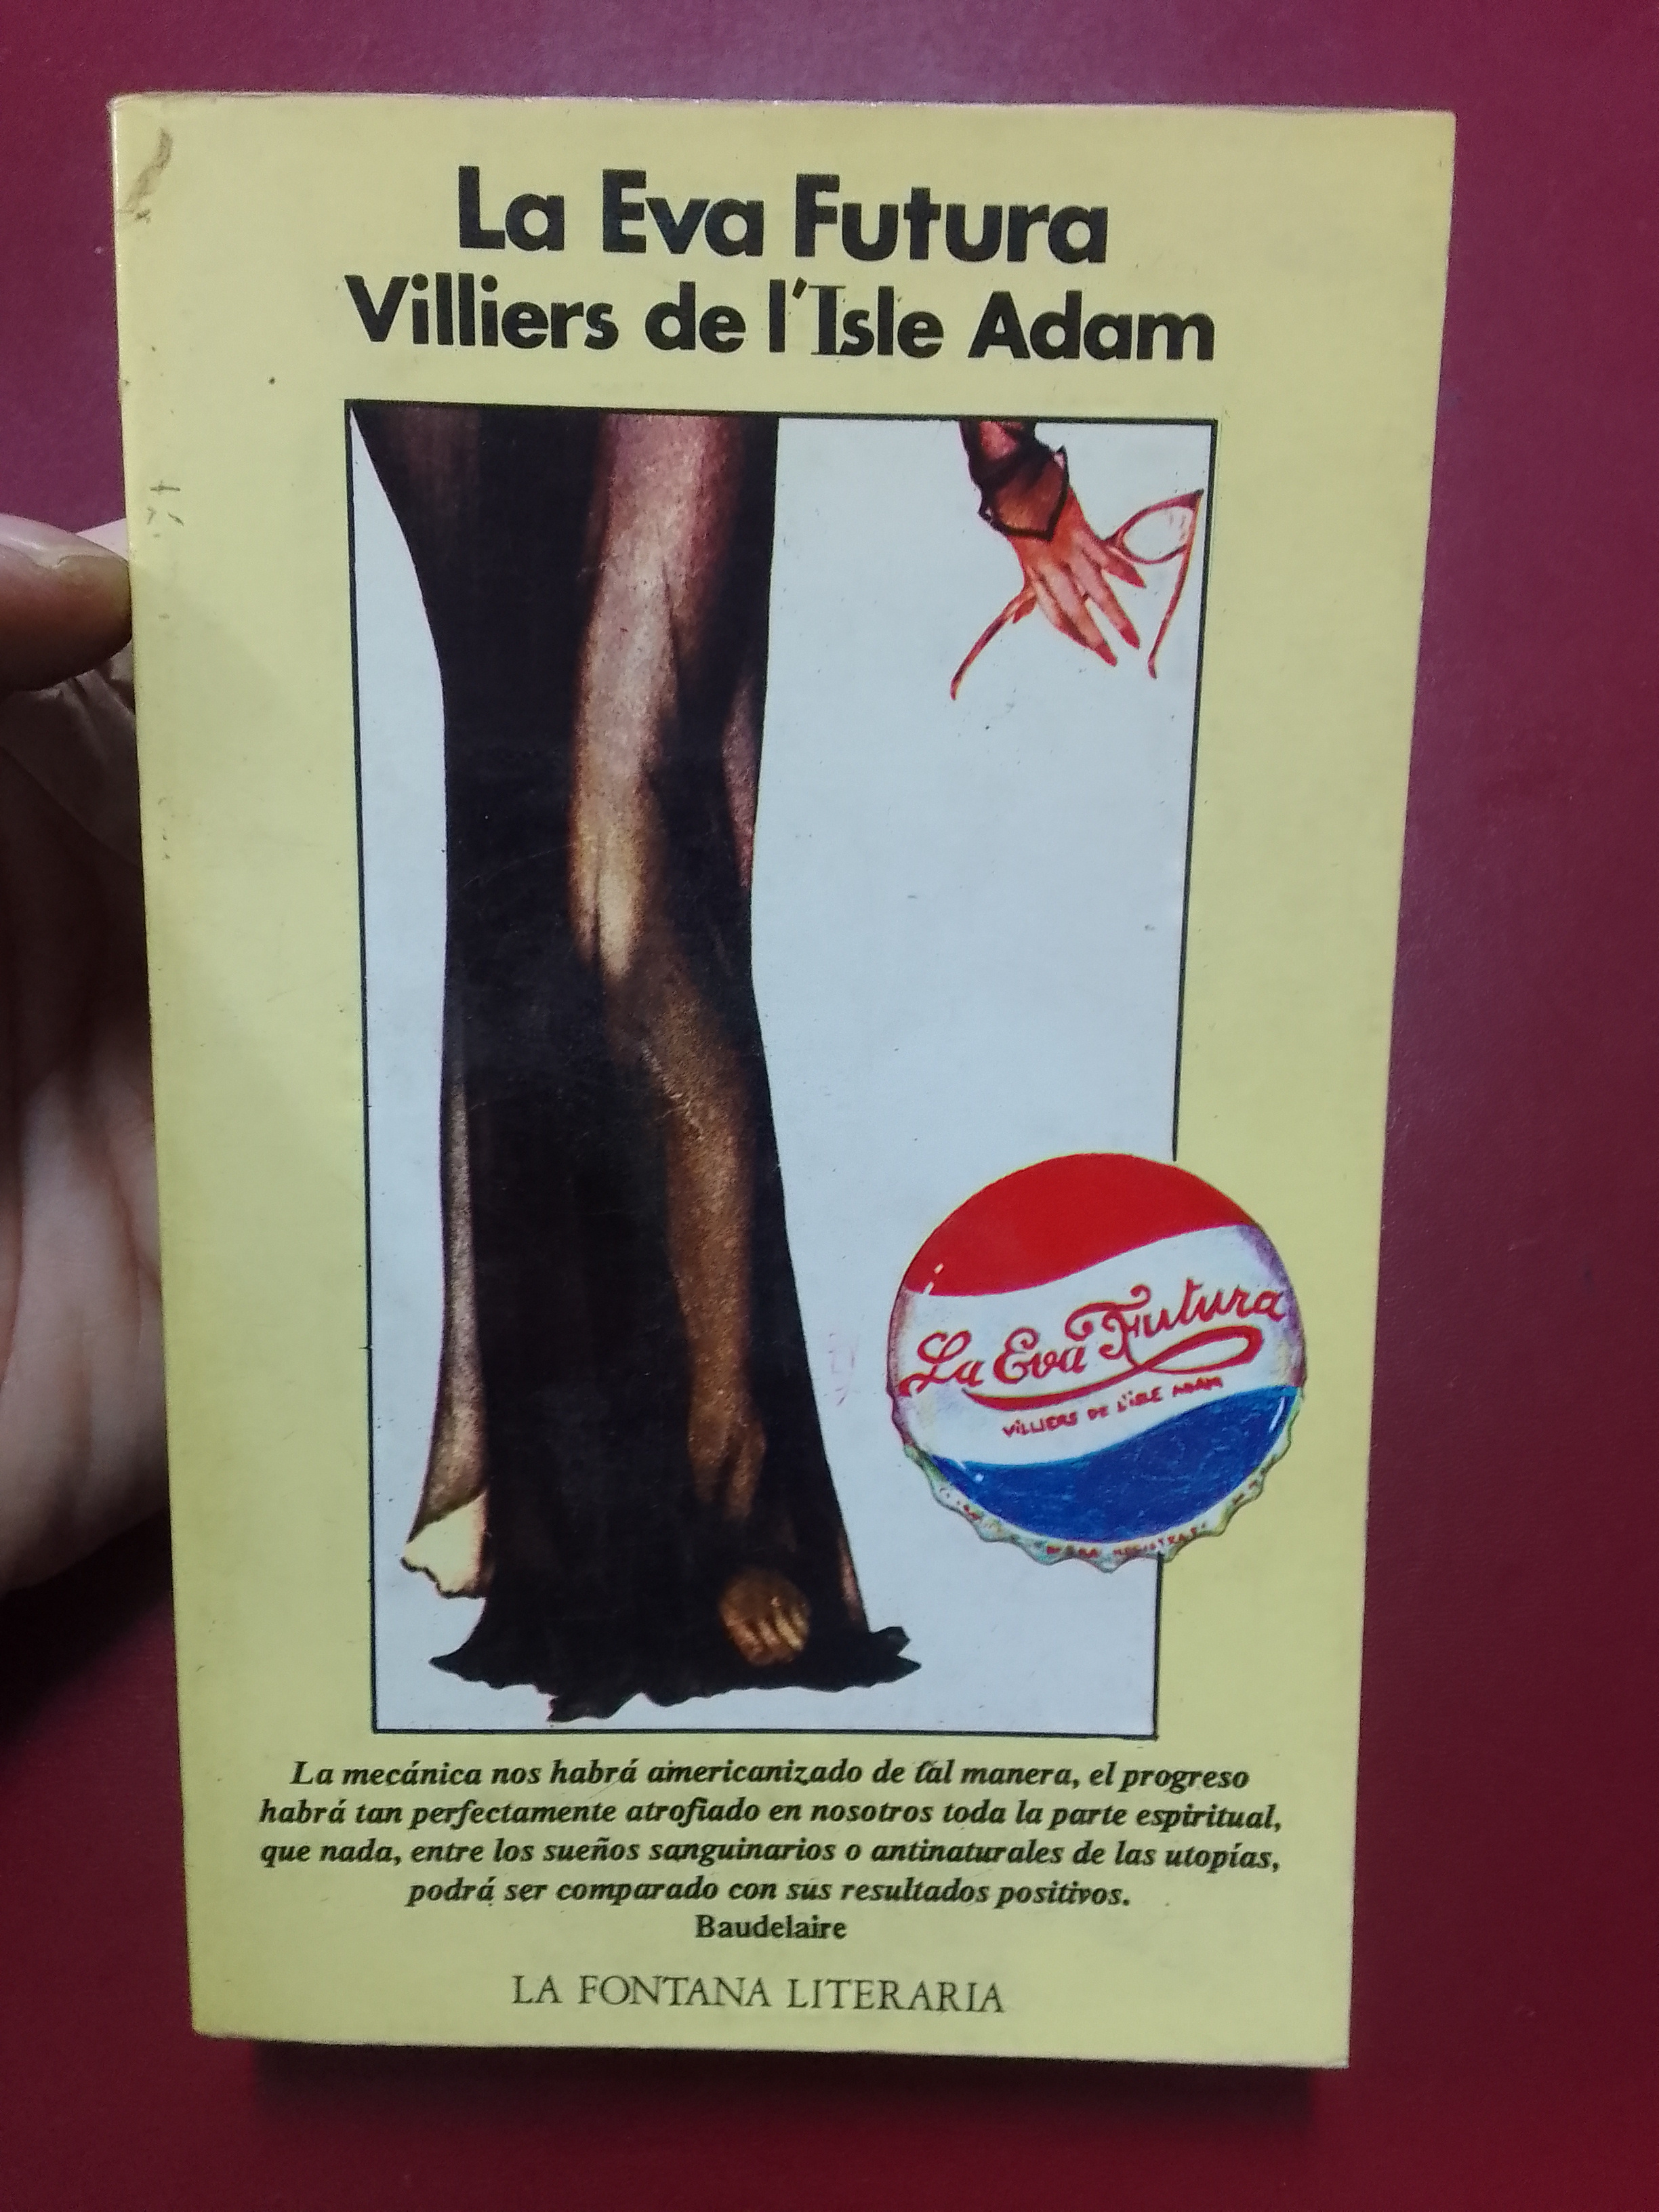 La Eva futura - Villiers de l'Isle Adam